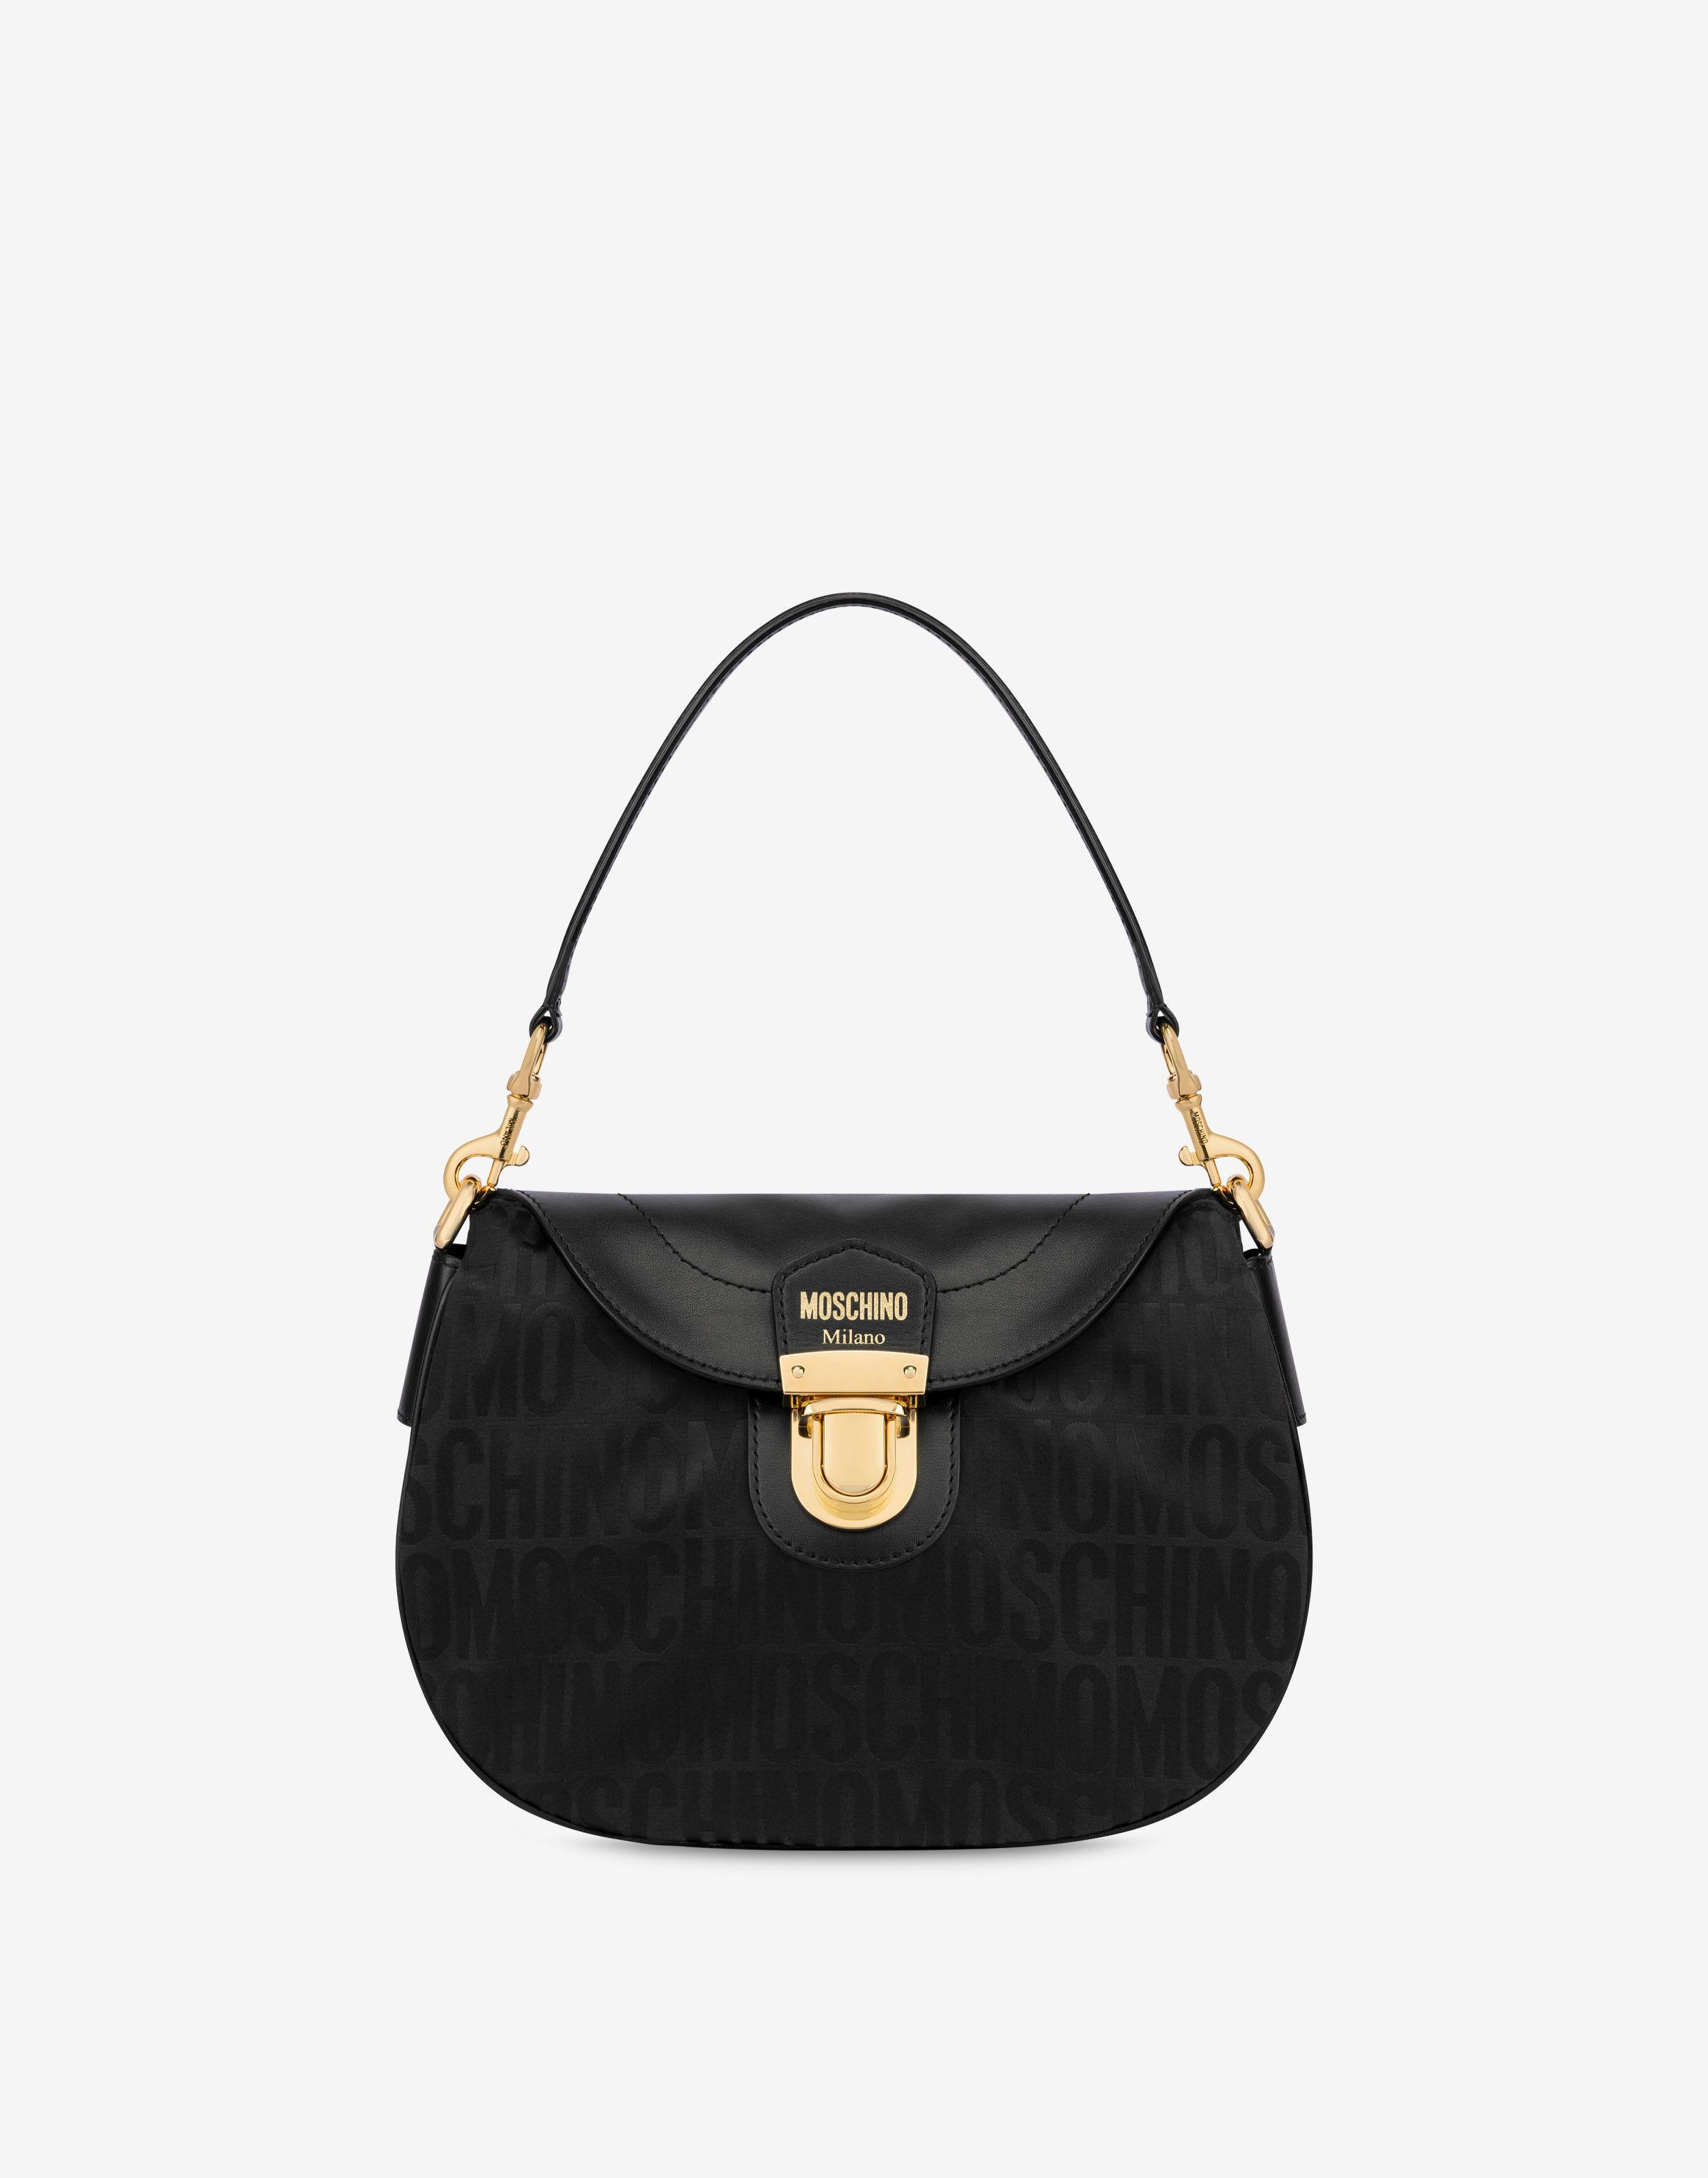 Moschino All-over Logo Nylon Handbag in Black | Lyst